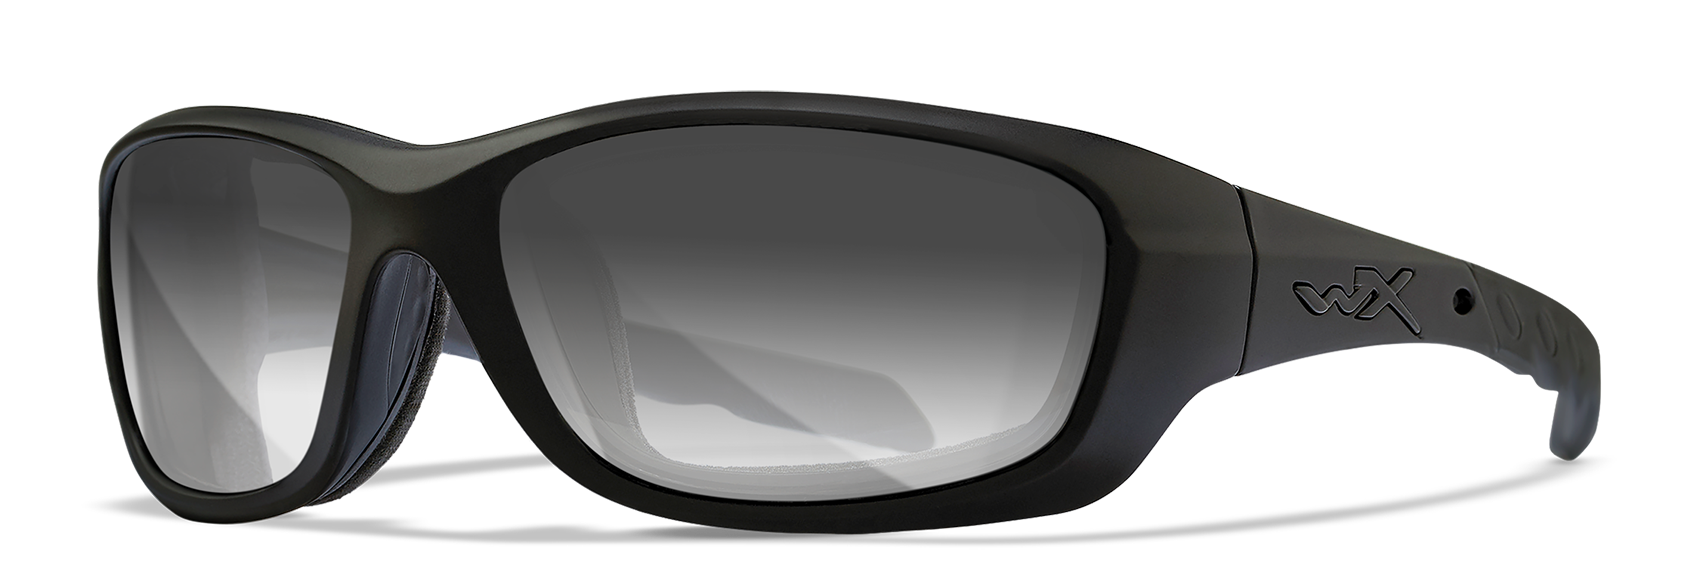 Wiley X WX GRAVITY Oval Sunglasses  Matte Black 63-17-119